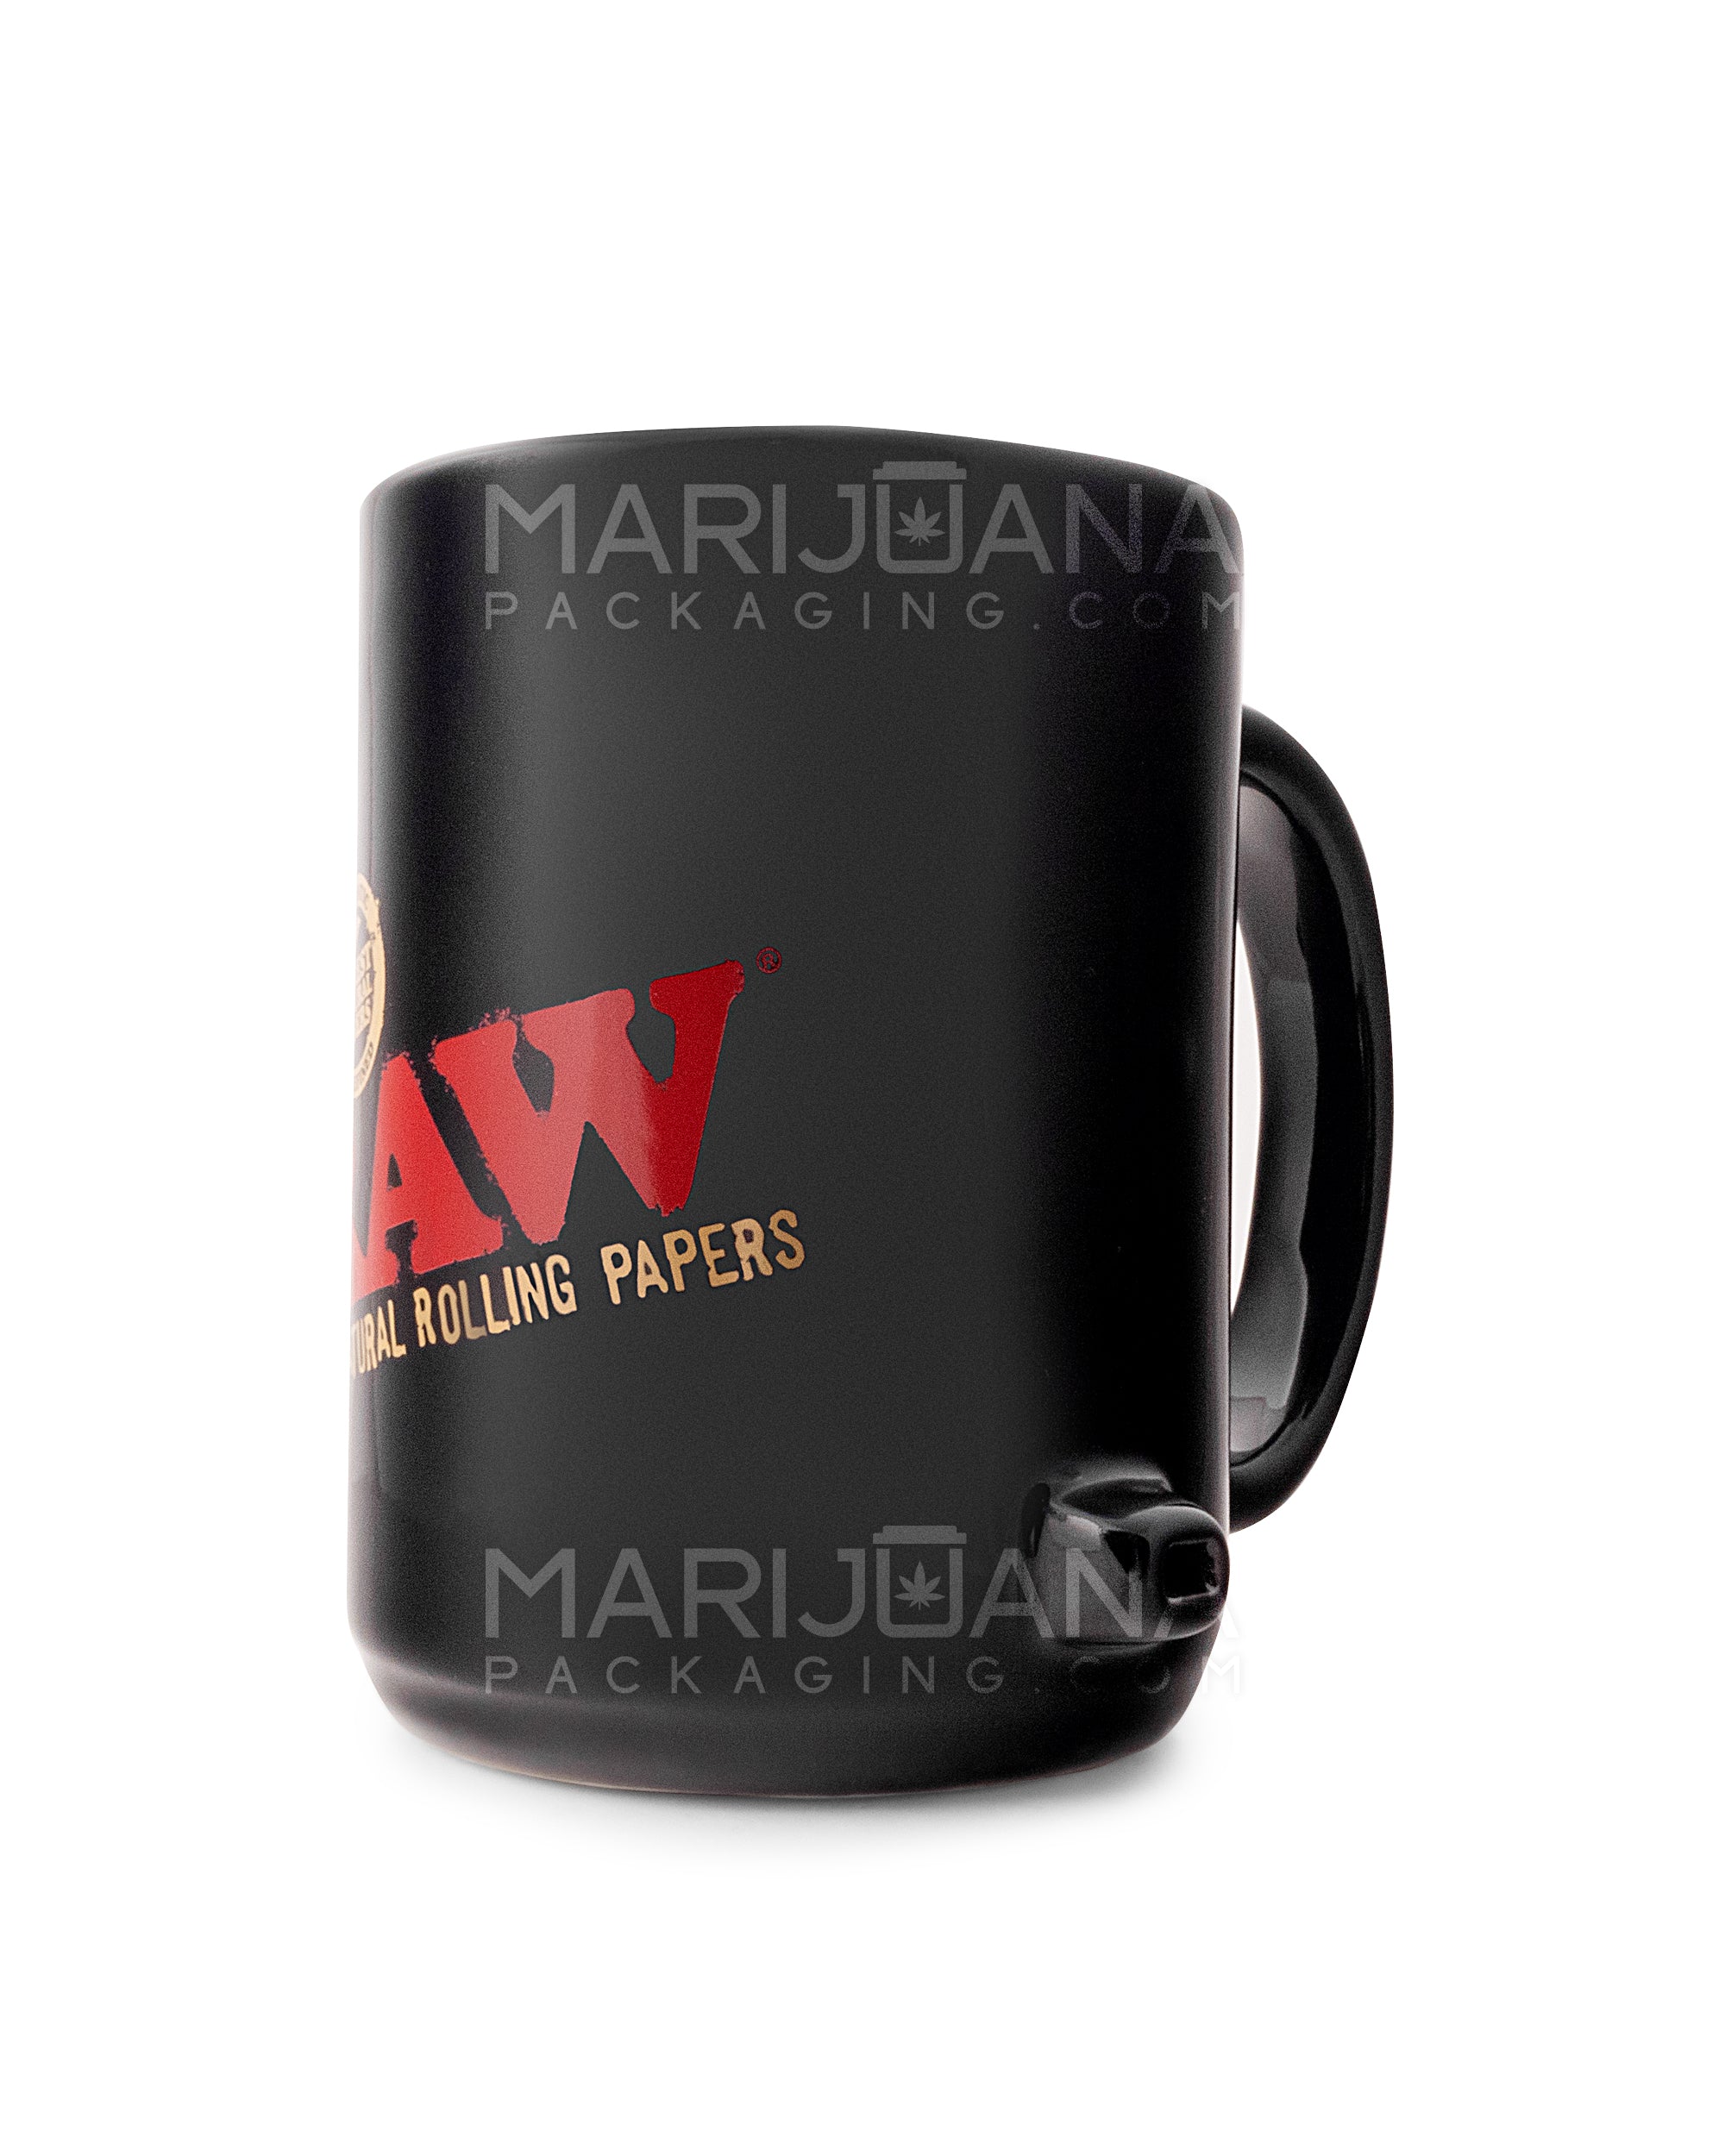 RAW | Wake Up & Bake Up Black Ceramic Cone Mug